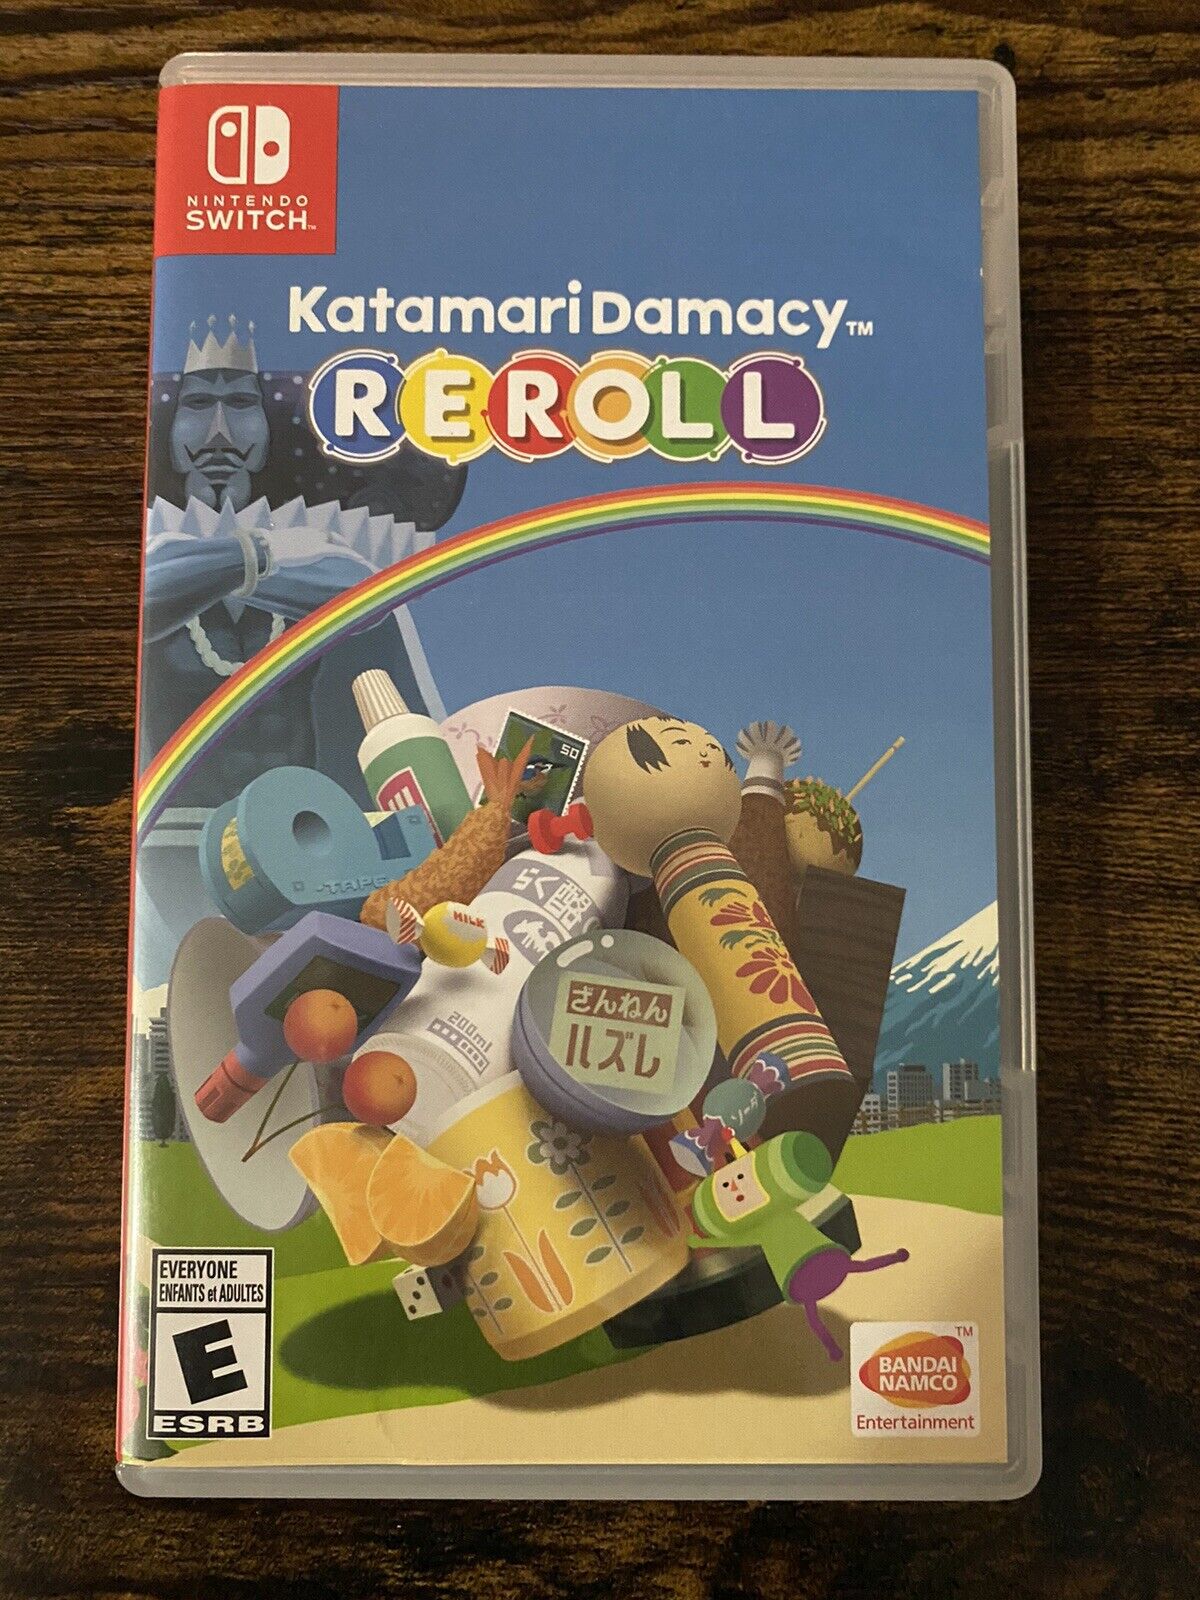 Katamari Damacy Reroll - Nintendo Switch